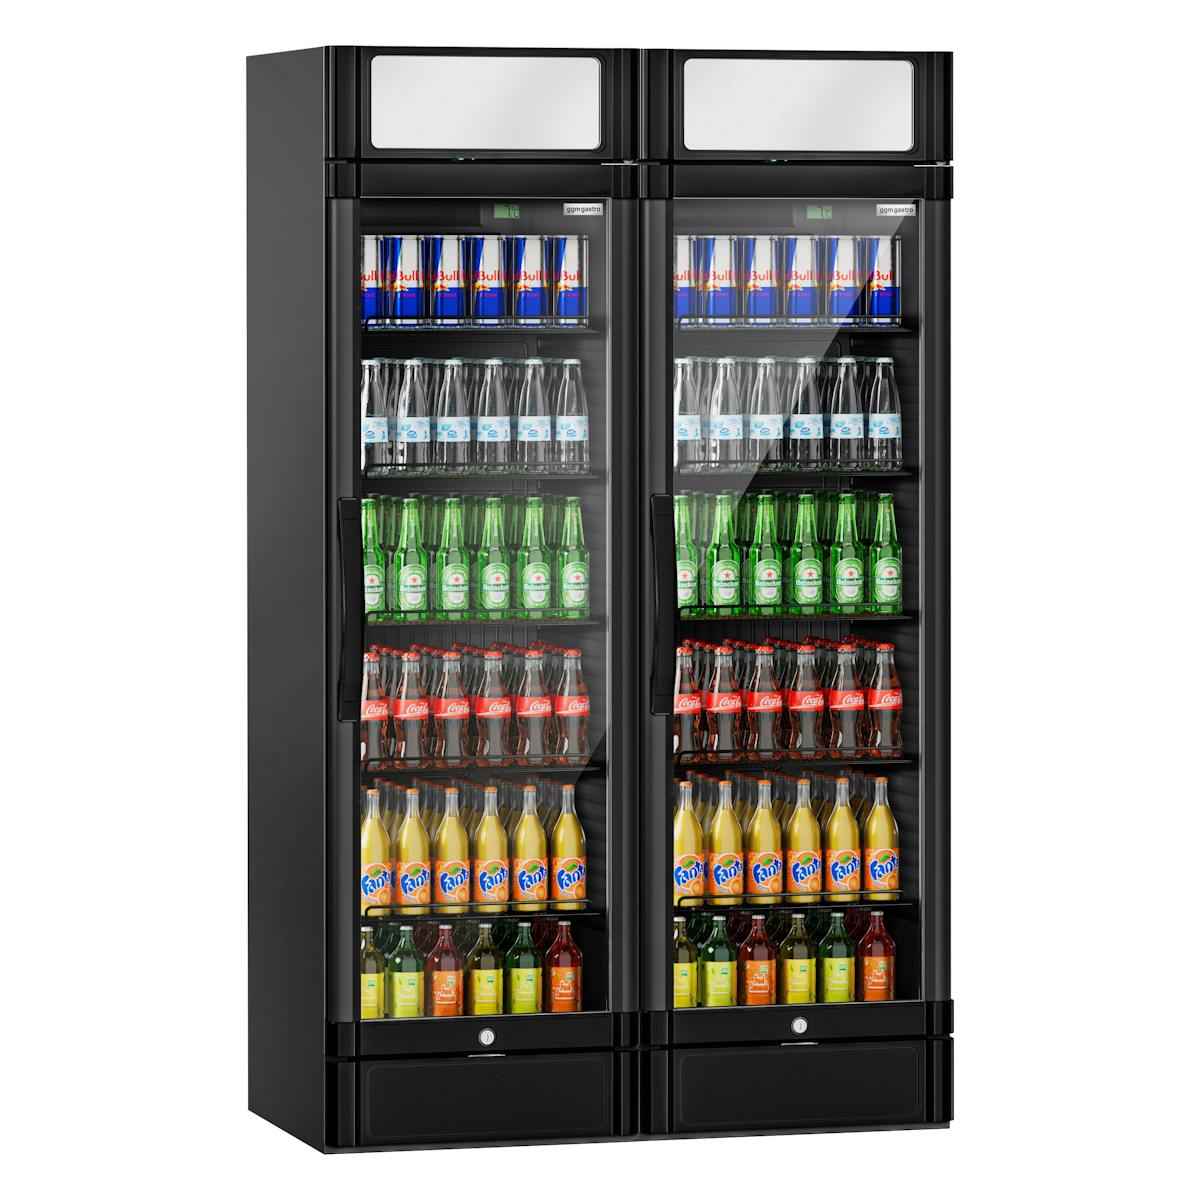 (2 pieces) Beverage refrigerator - 694 litres (total) - black